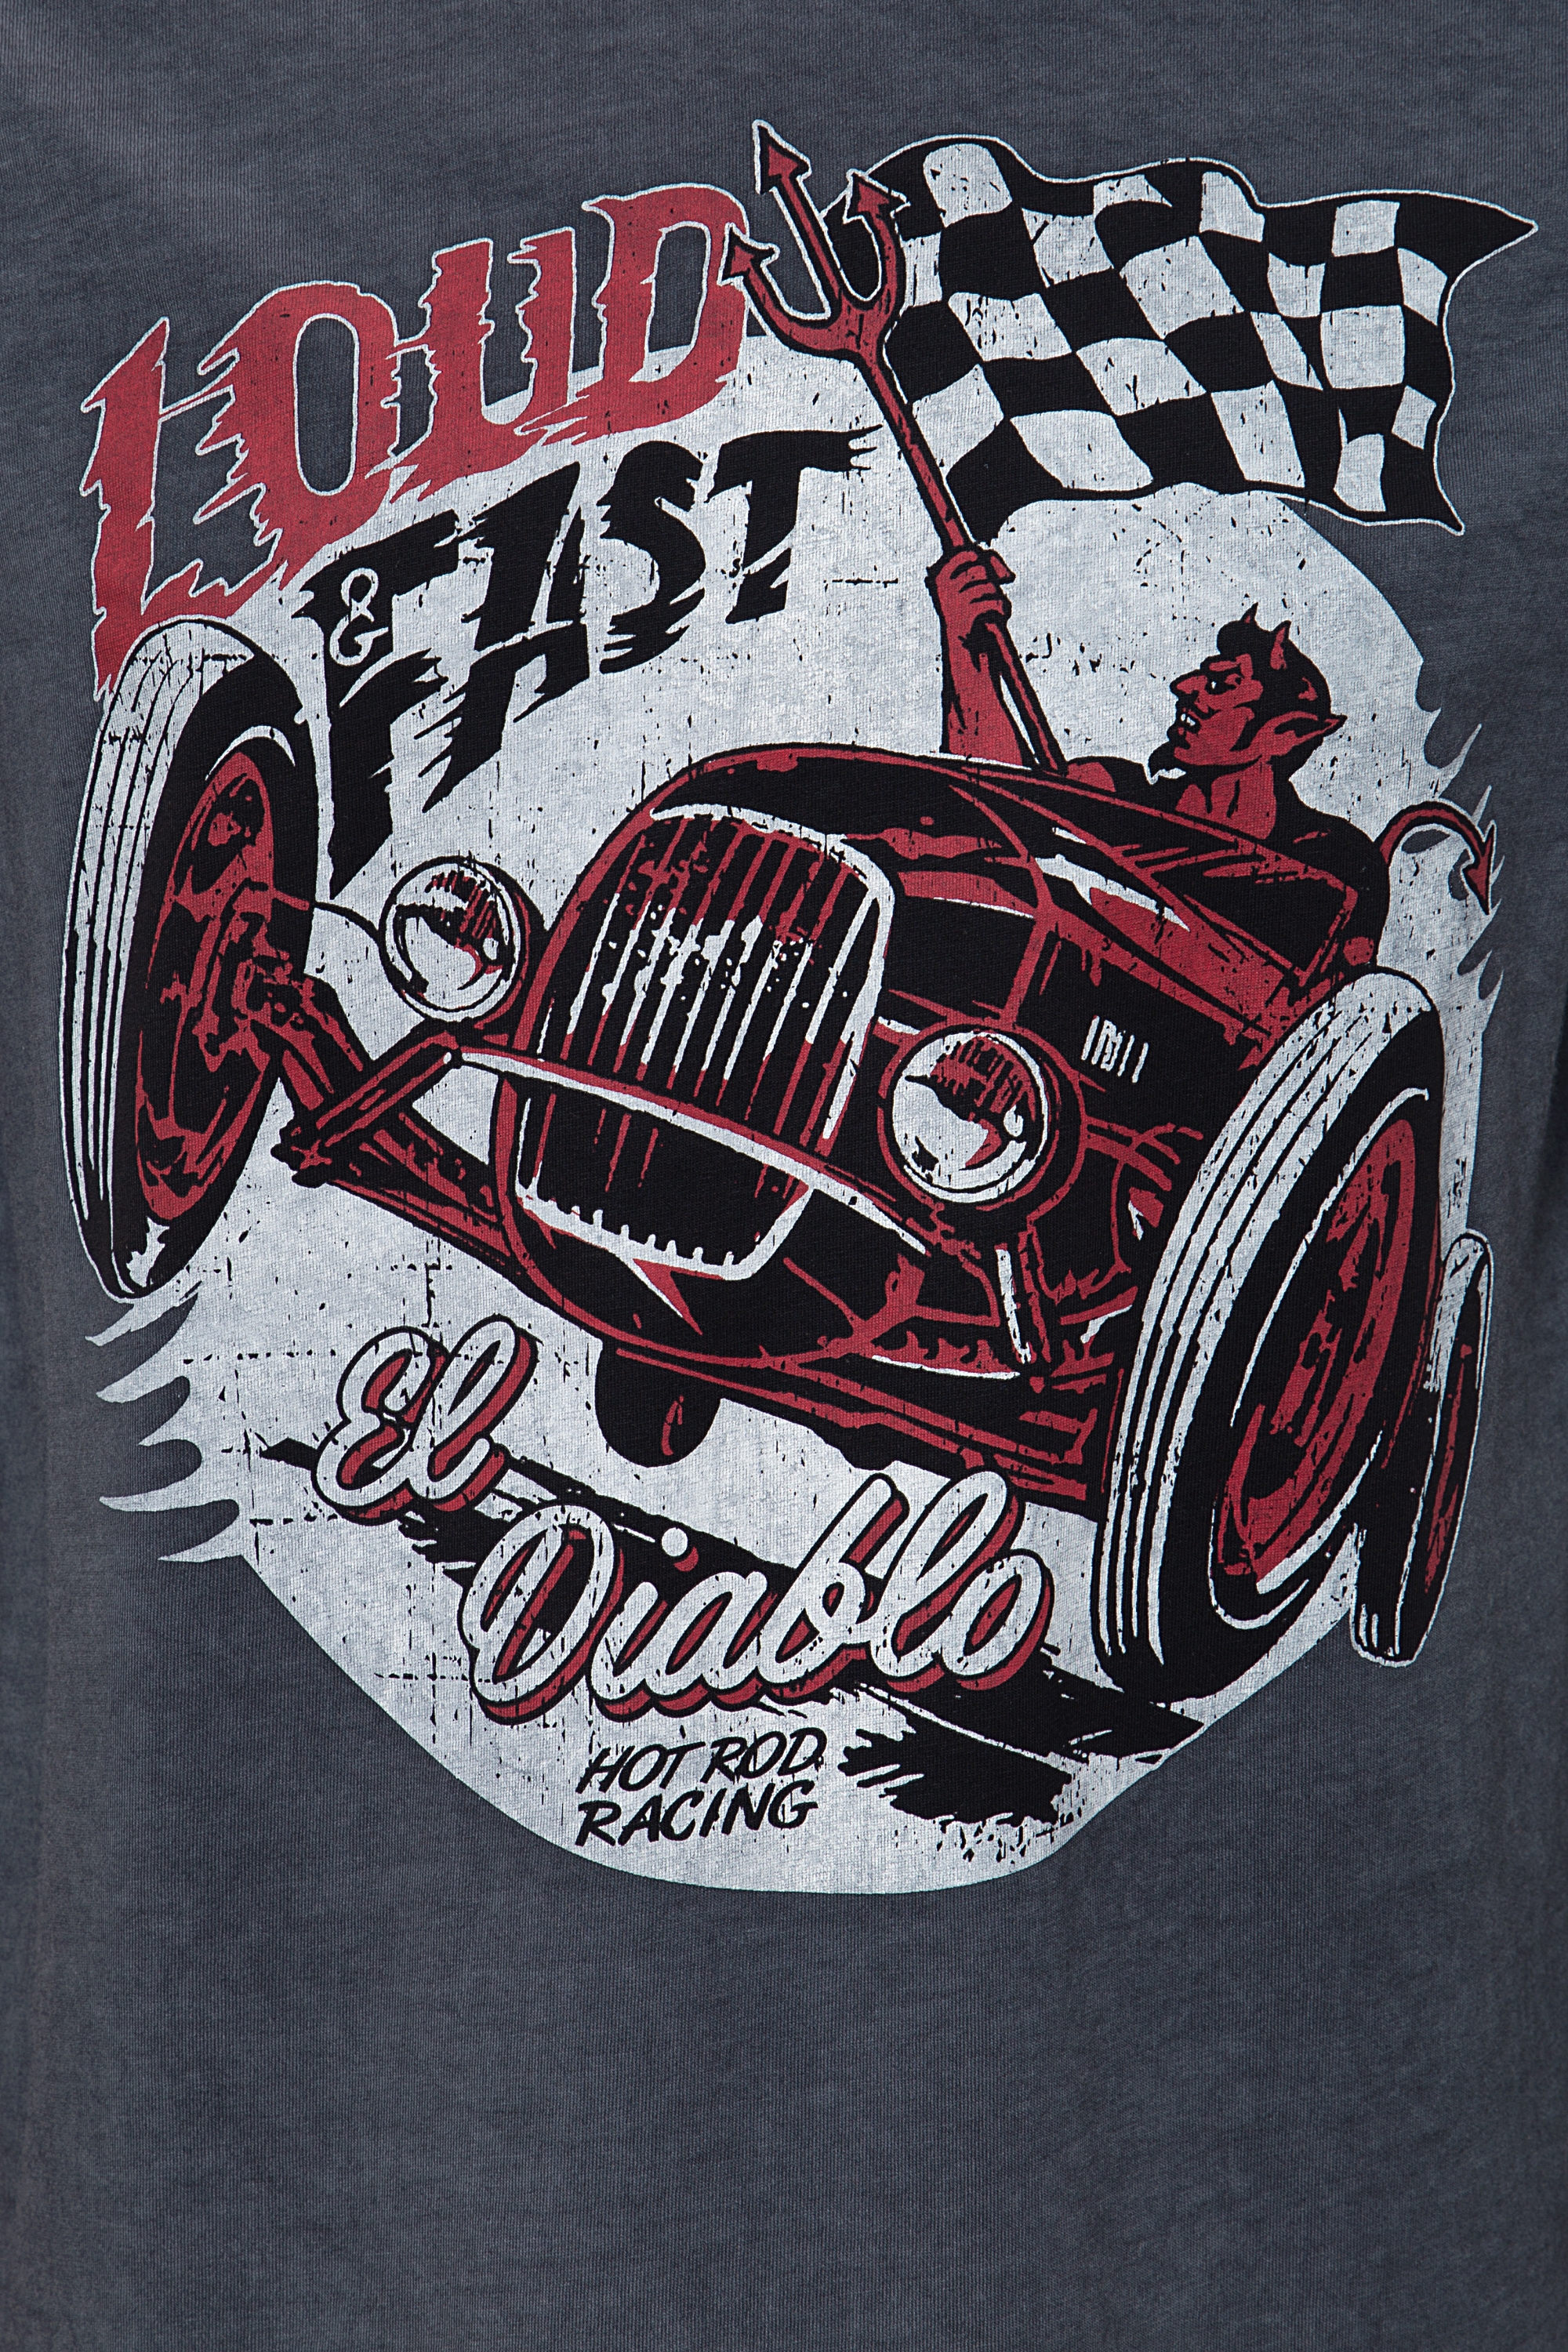 King Kerosin T-Shirt - Loud & Fast L